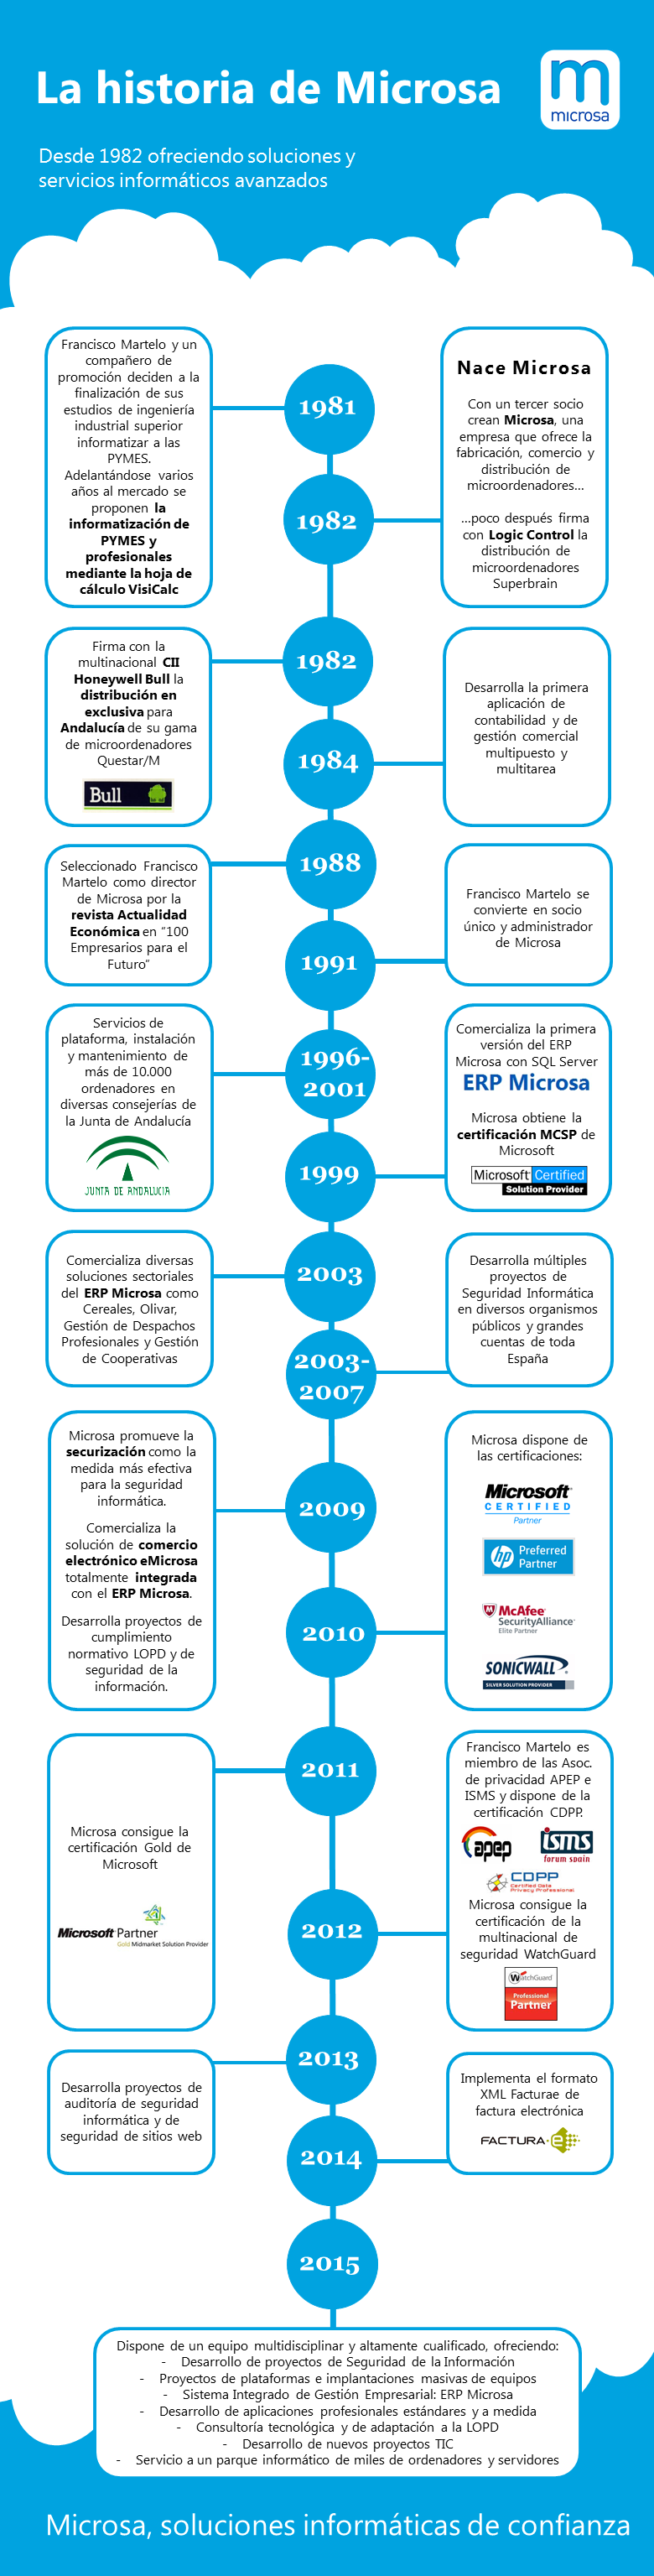 Infografia-La-Historia-de-Microsa